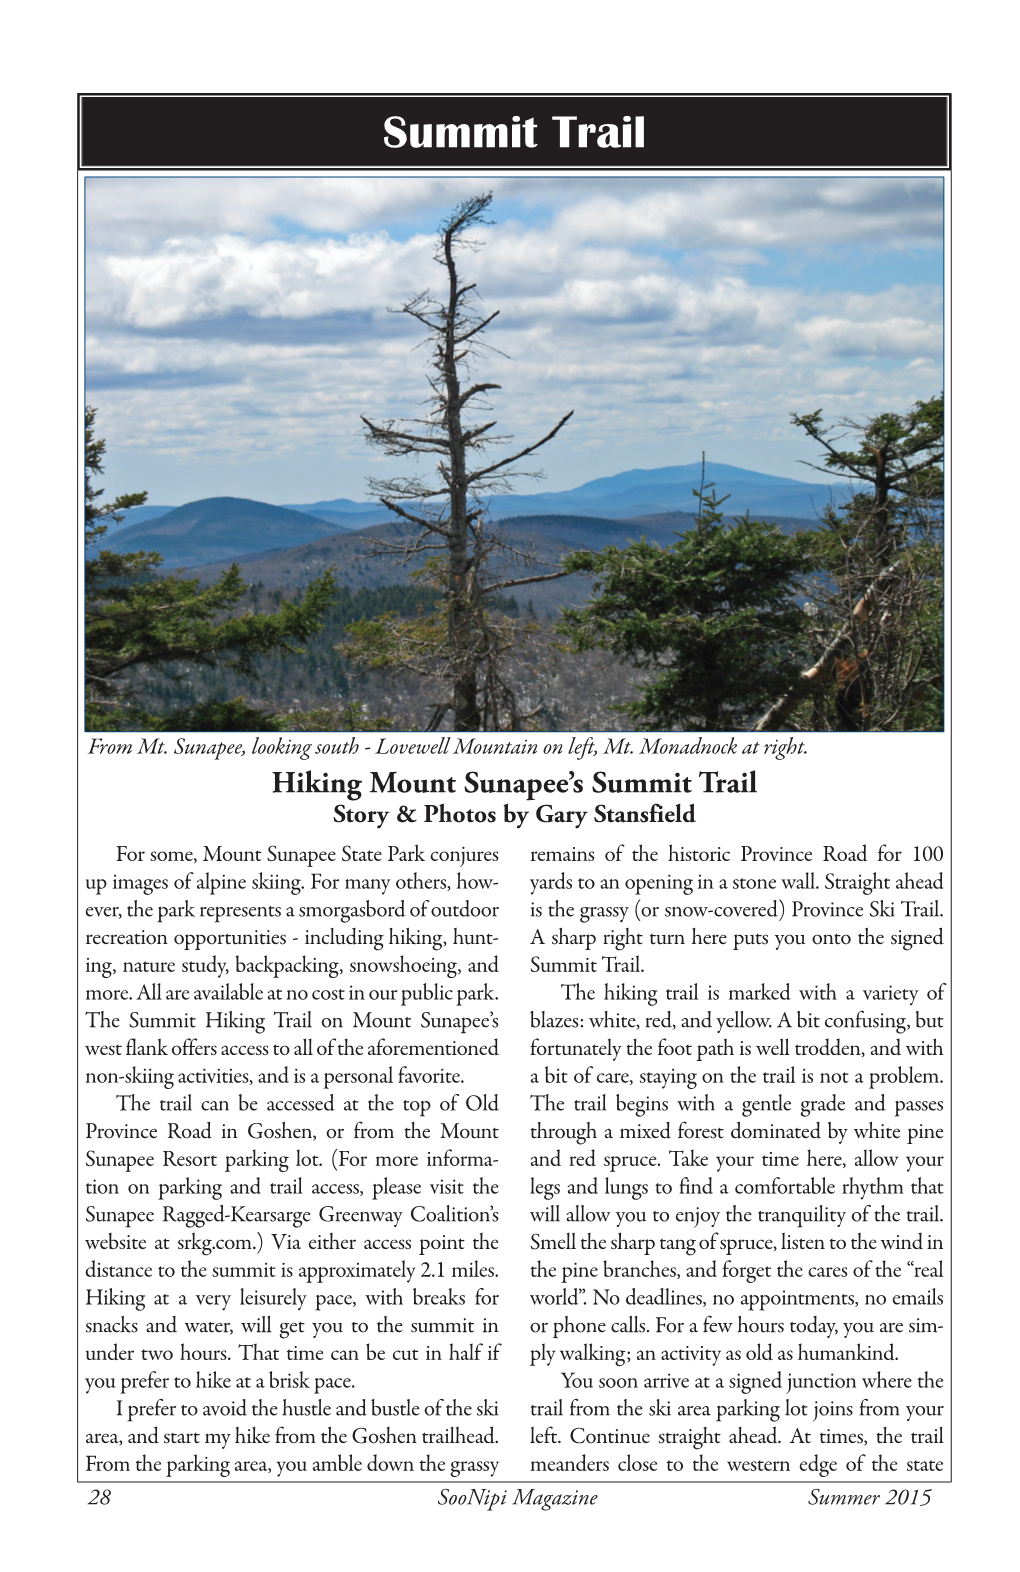 Hiking Mount Sunapee's Summit Trail